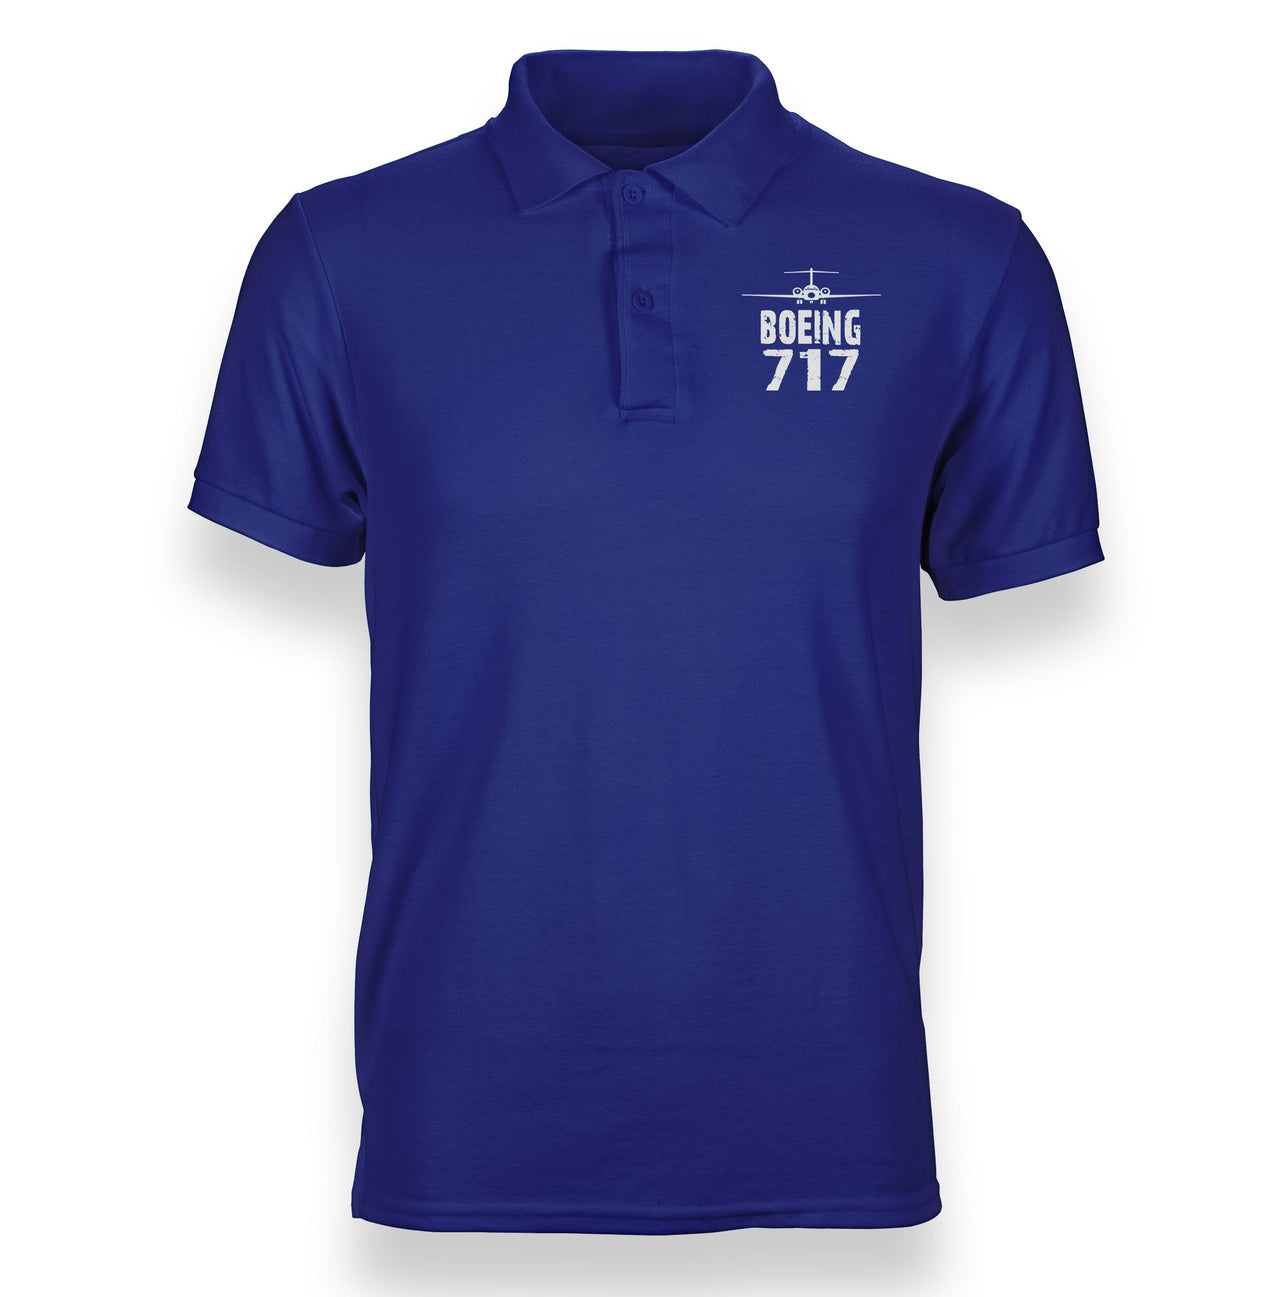 Boeing 717 & Plane Designed Polo T-Shirts